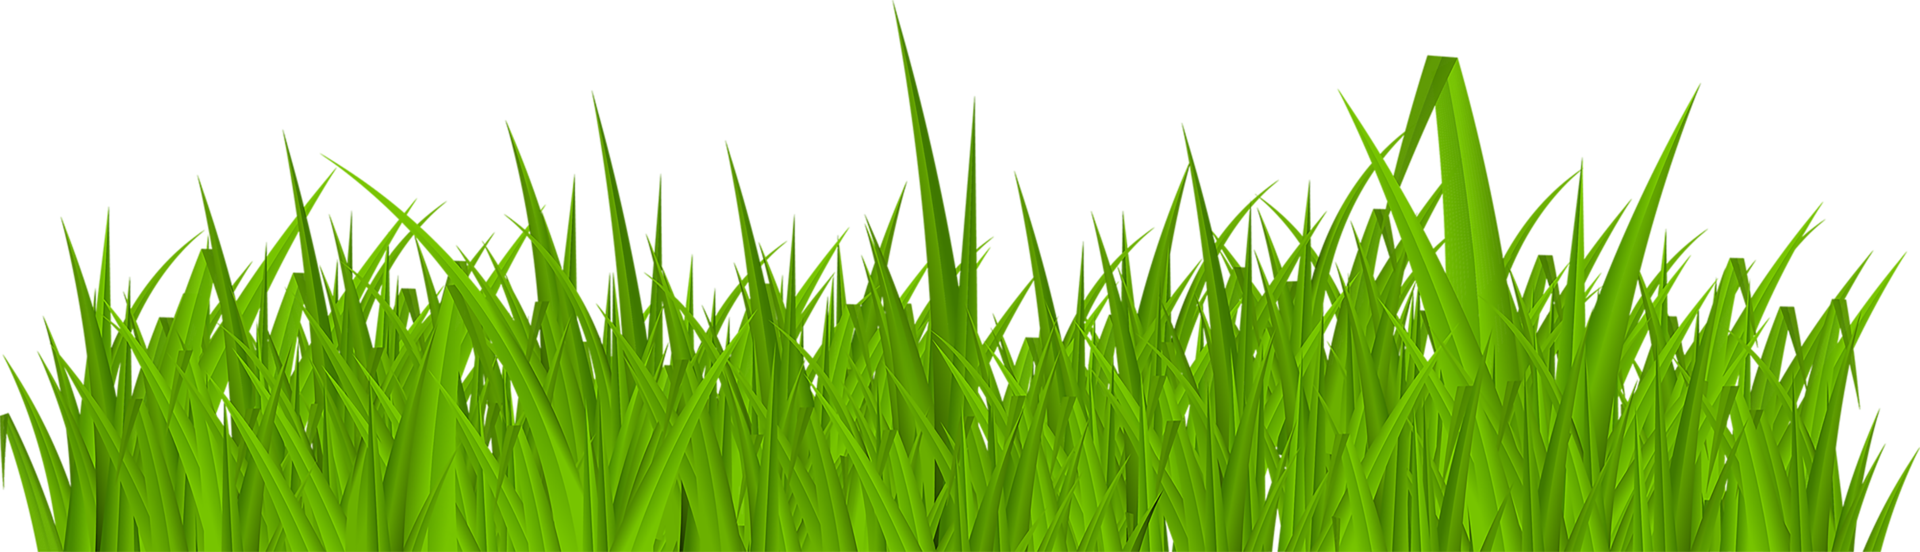 groen groeiend gras. png